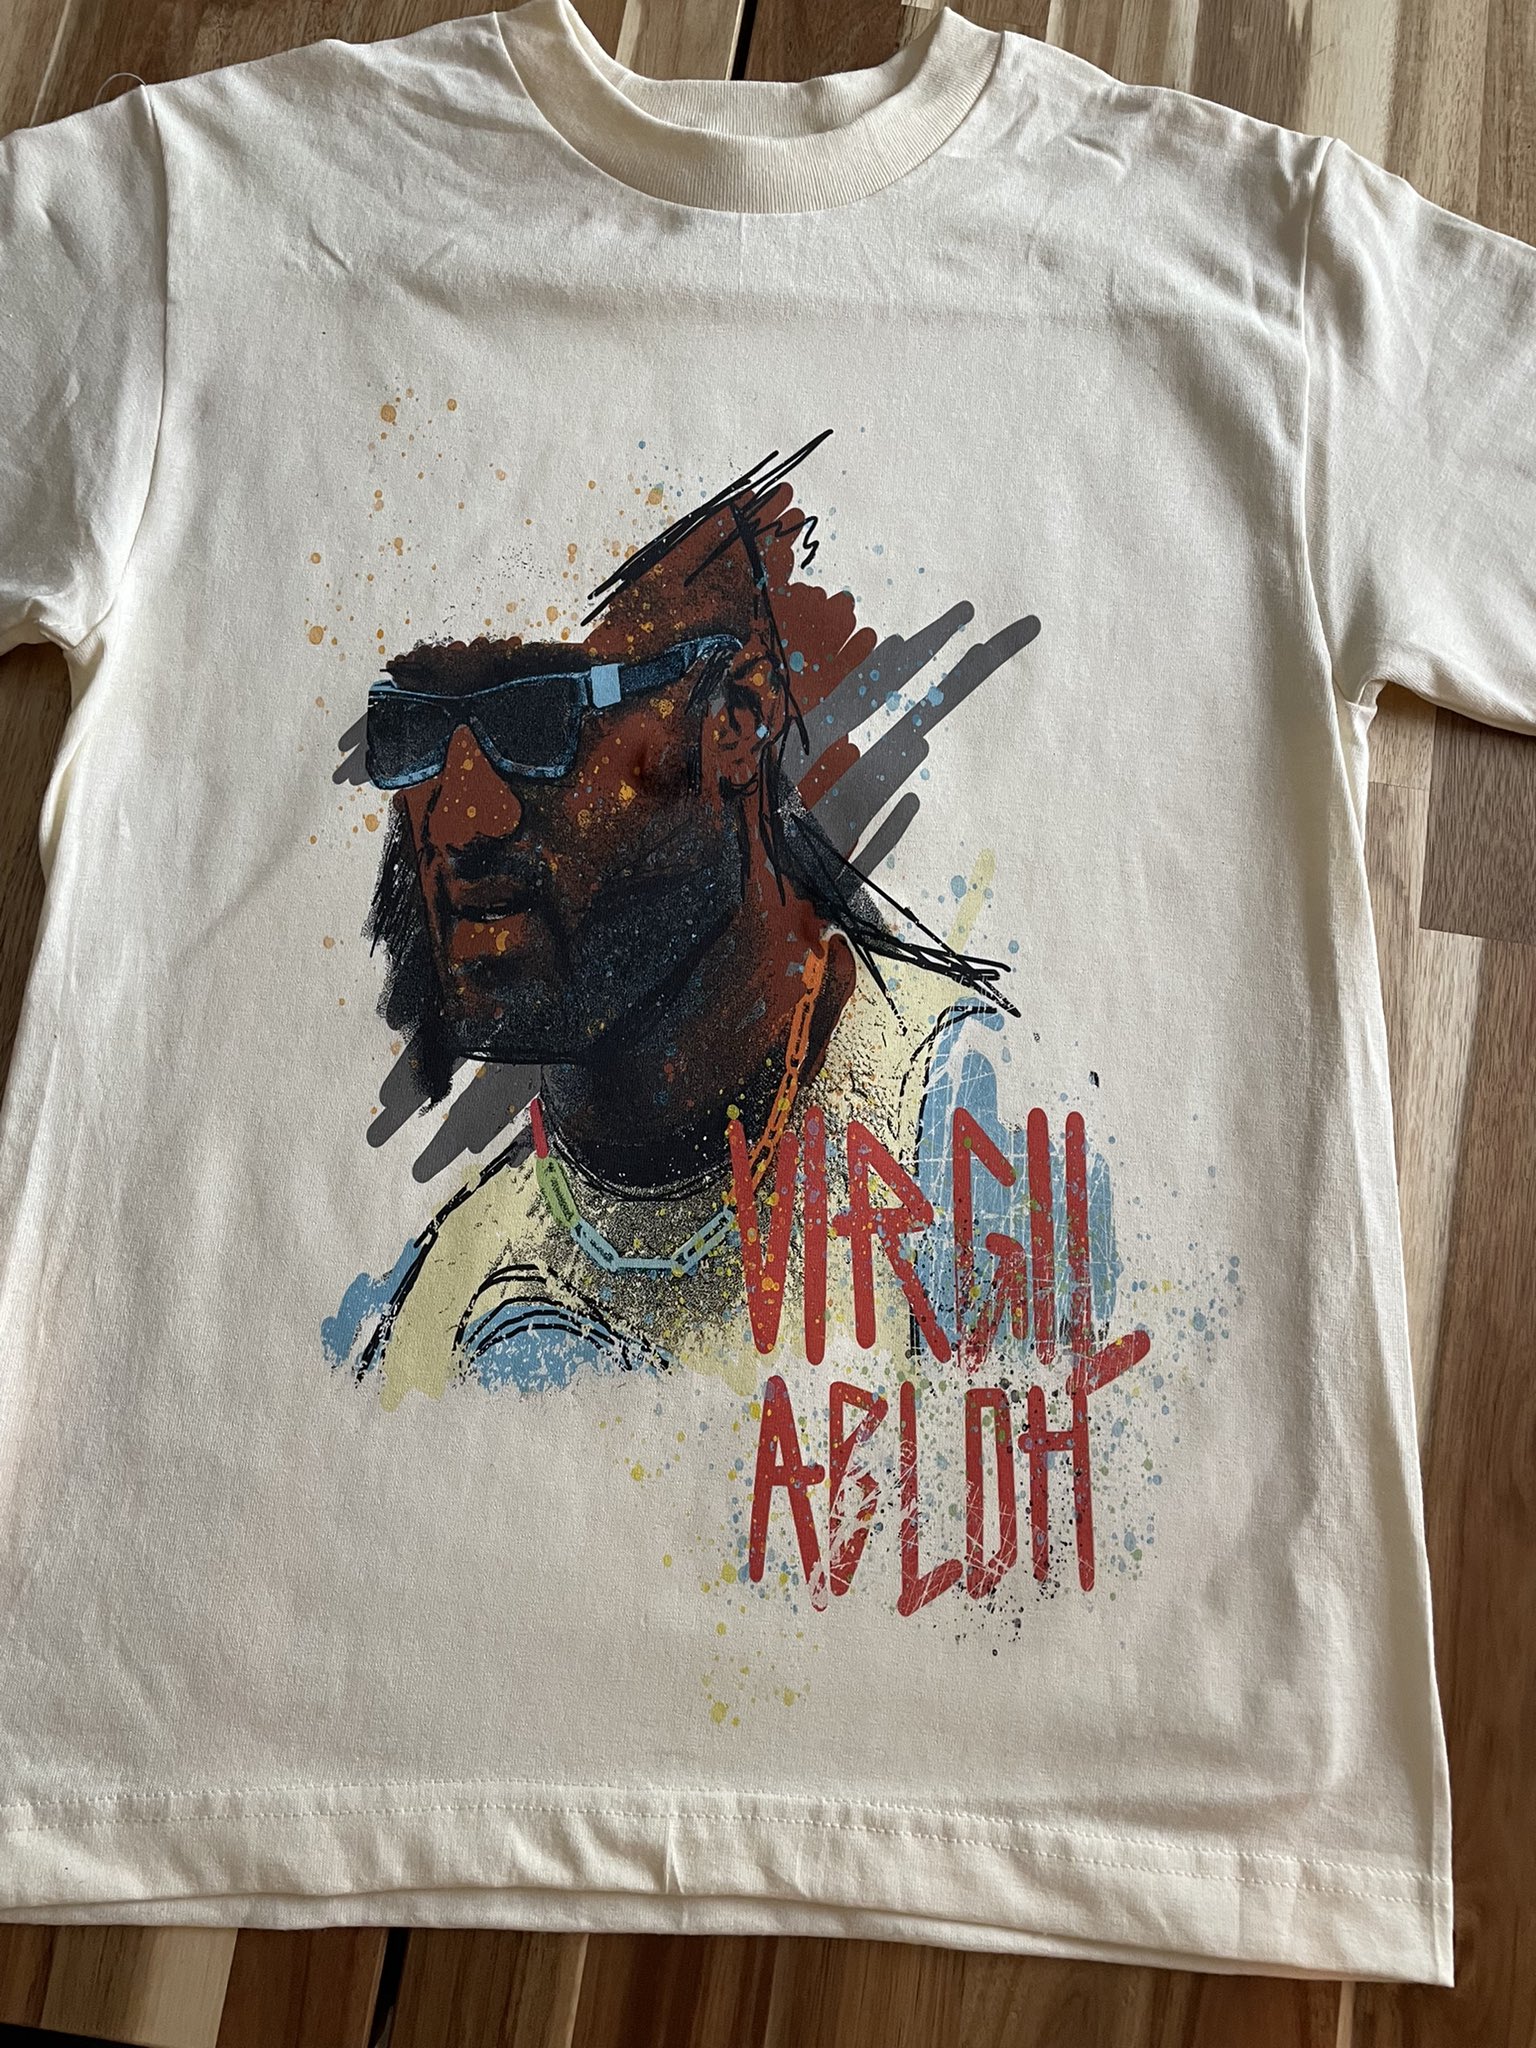 Long Live Virgil, Tops, Long Live Virgil Tshirt